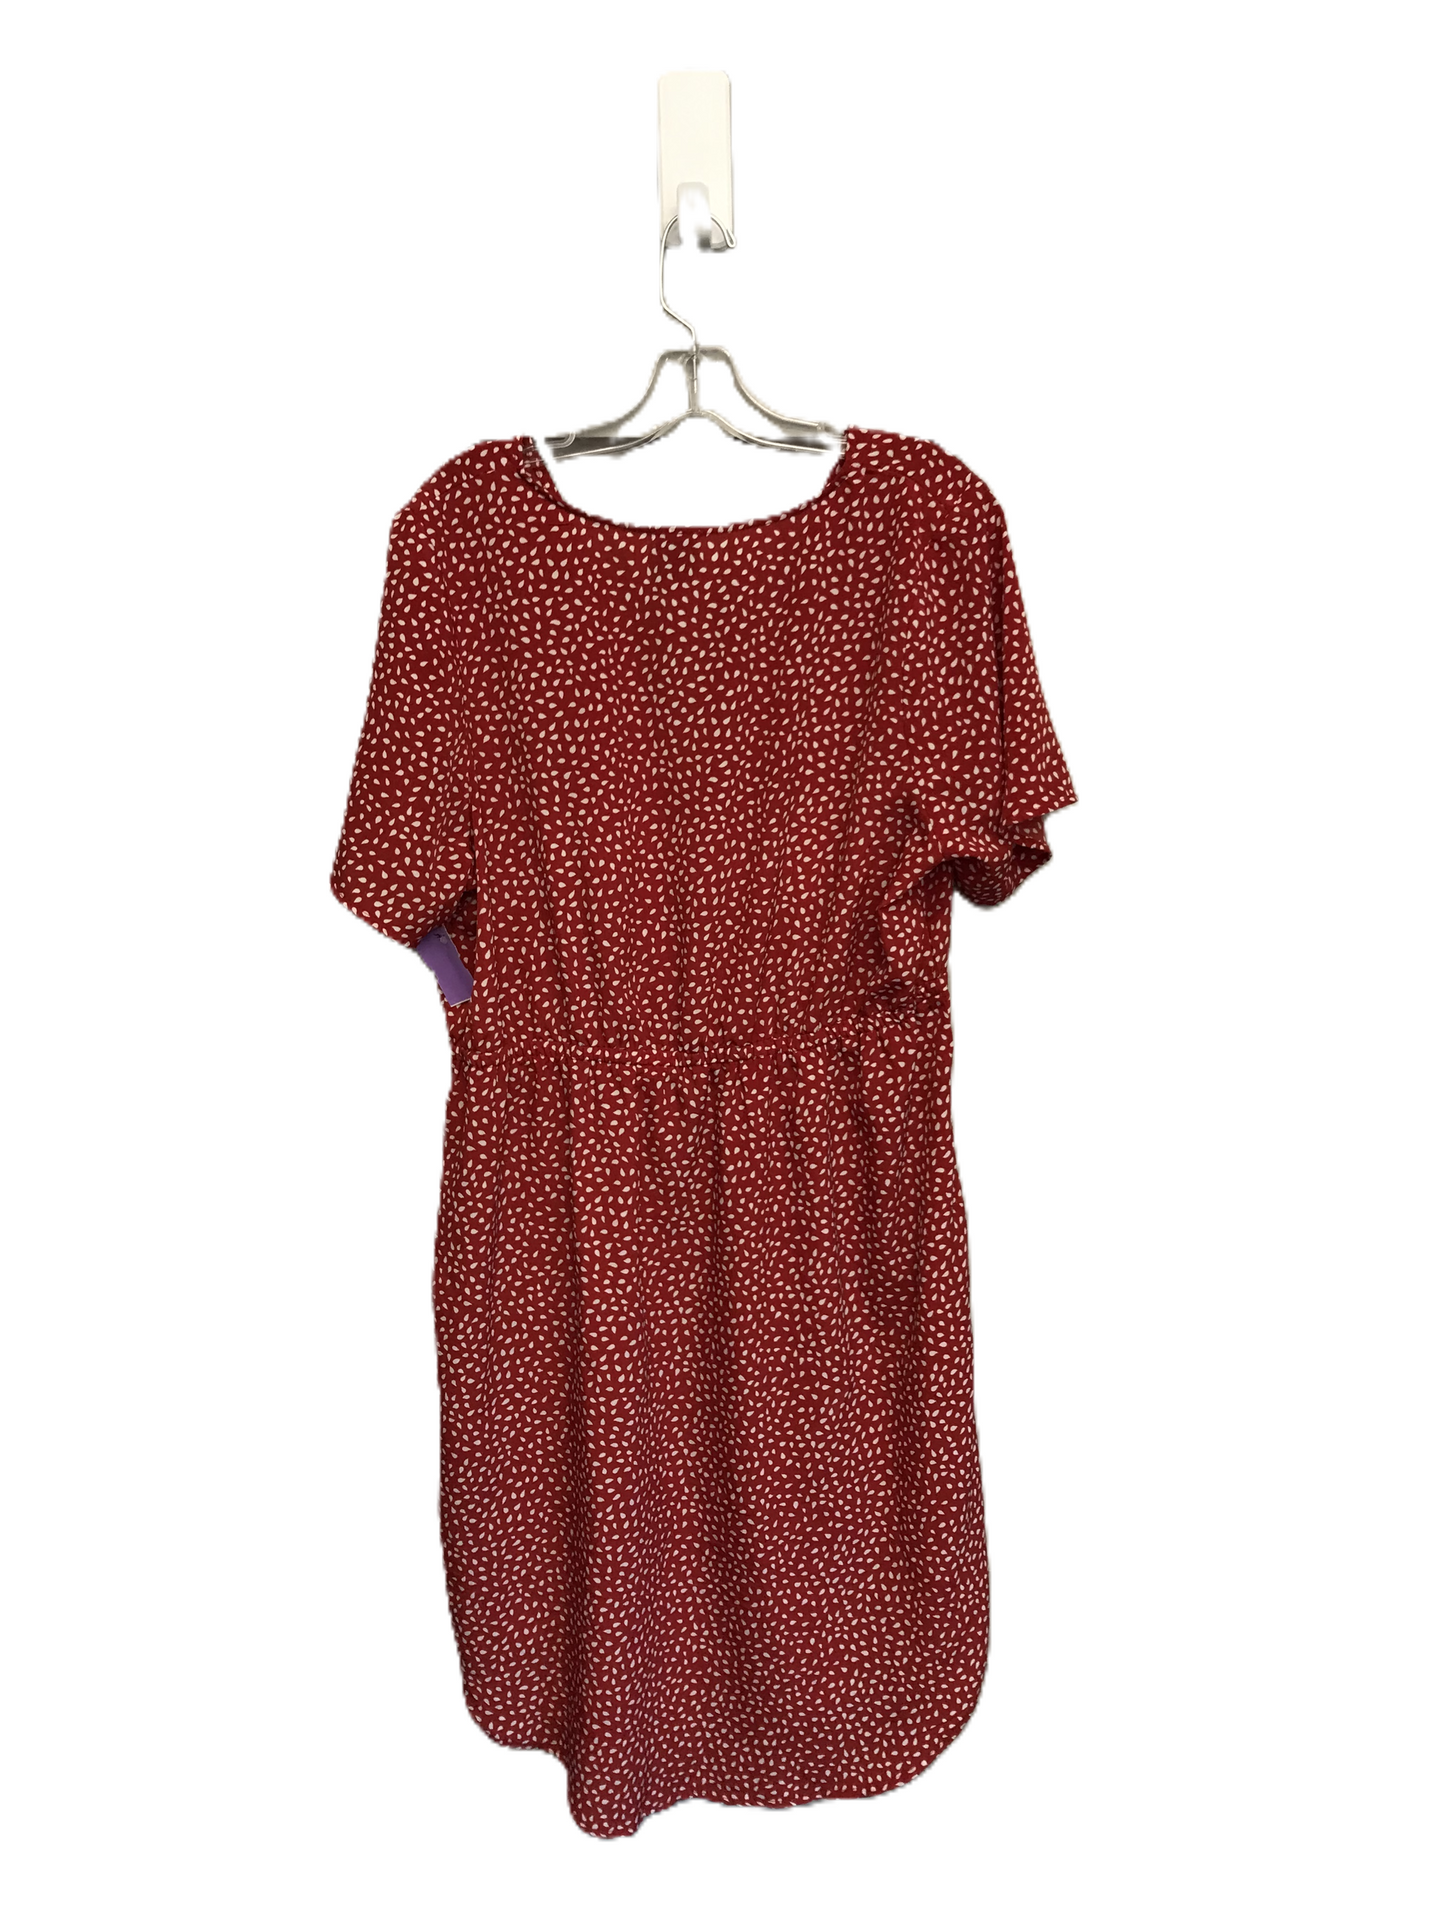 Polkadot Pattern Dress Casual Short By Cozy Co Size: 1x